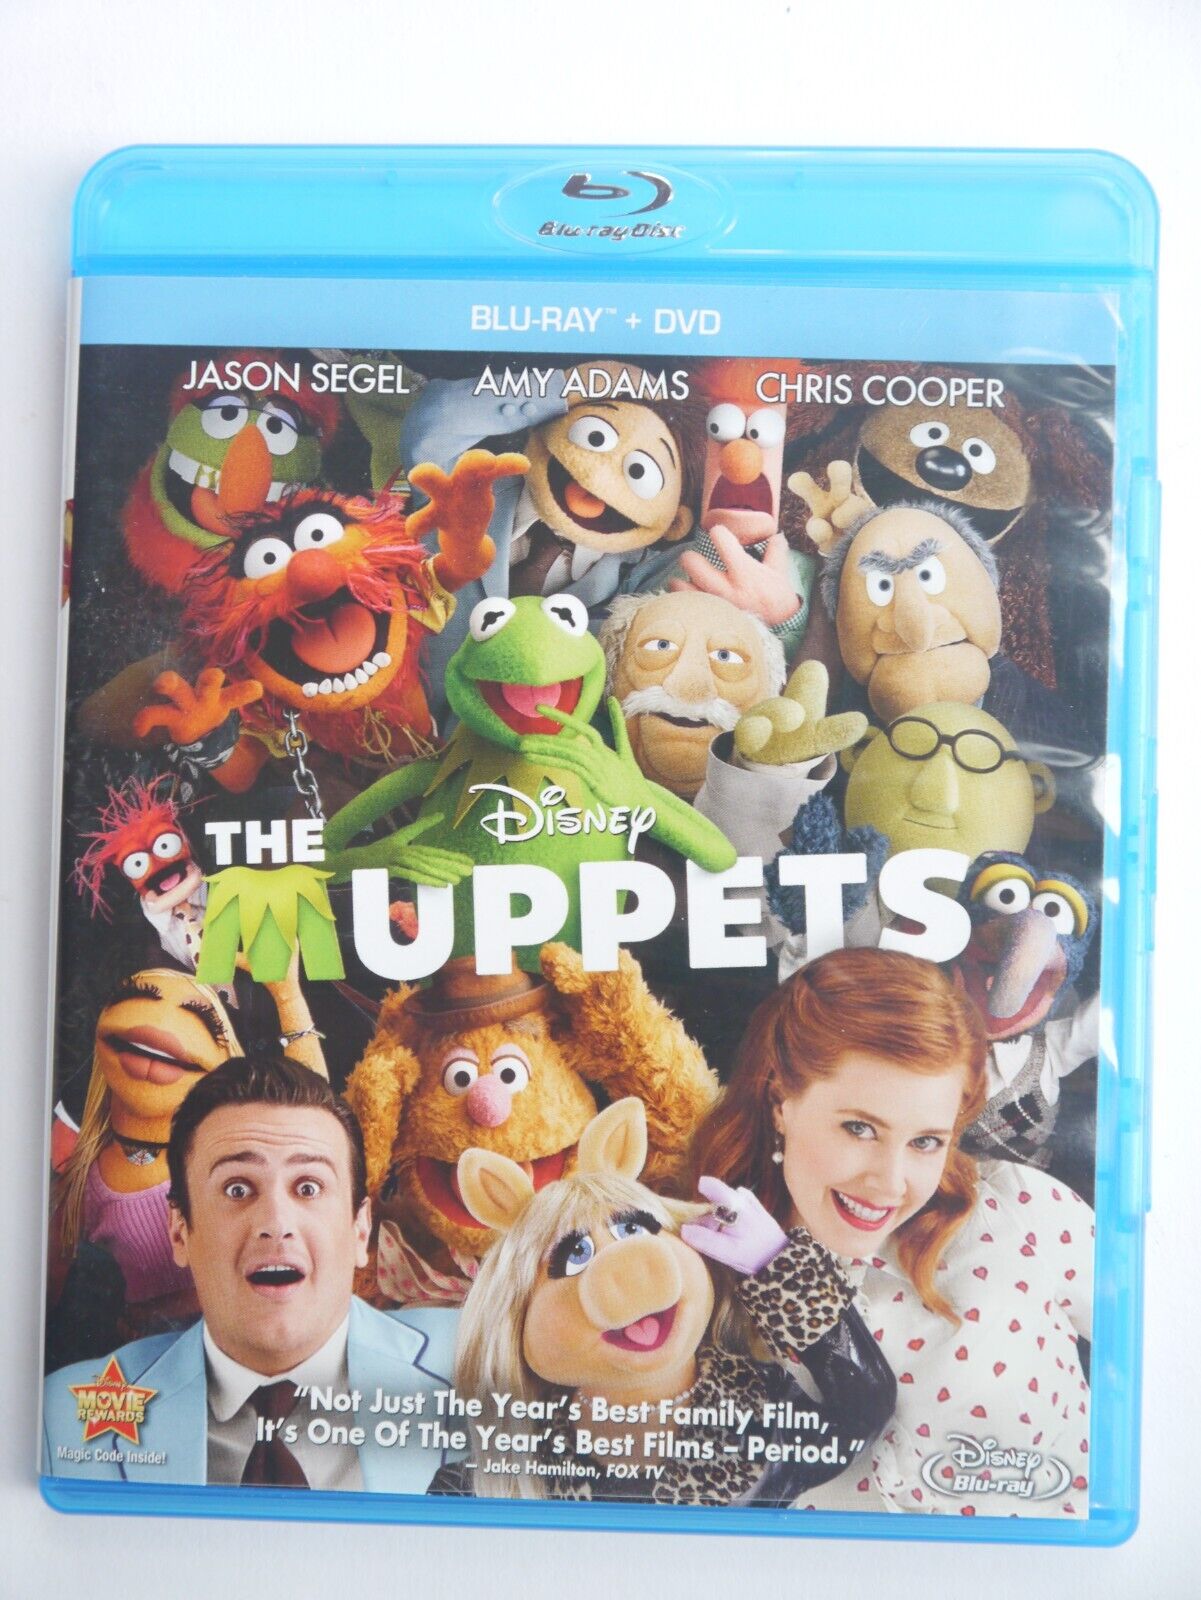 (D.4) The Muppets, Amy Adams. Blu-ray + DVD